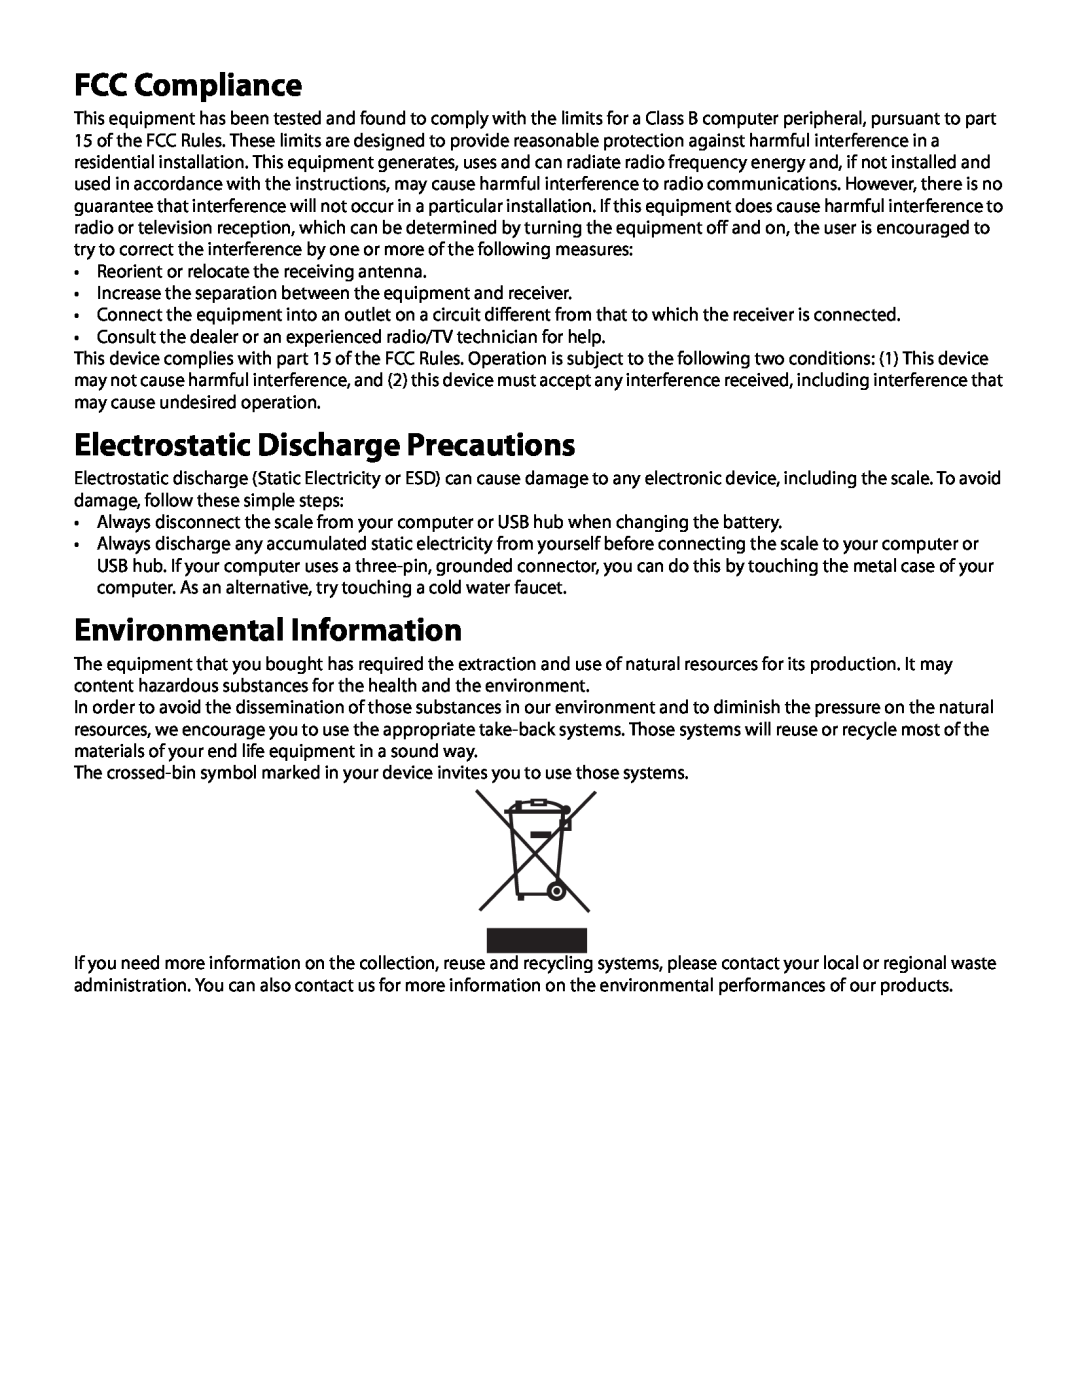 Dymo 40149 manual FCC Compliance, Electrostatic Discharge Precautions, Environmental Information 